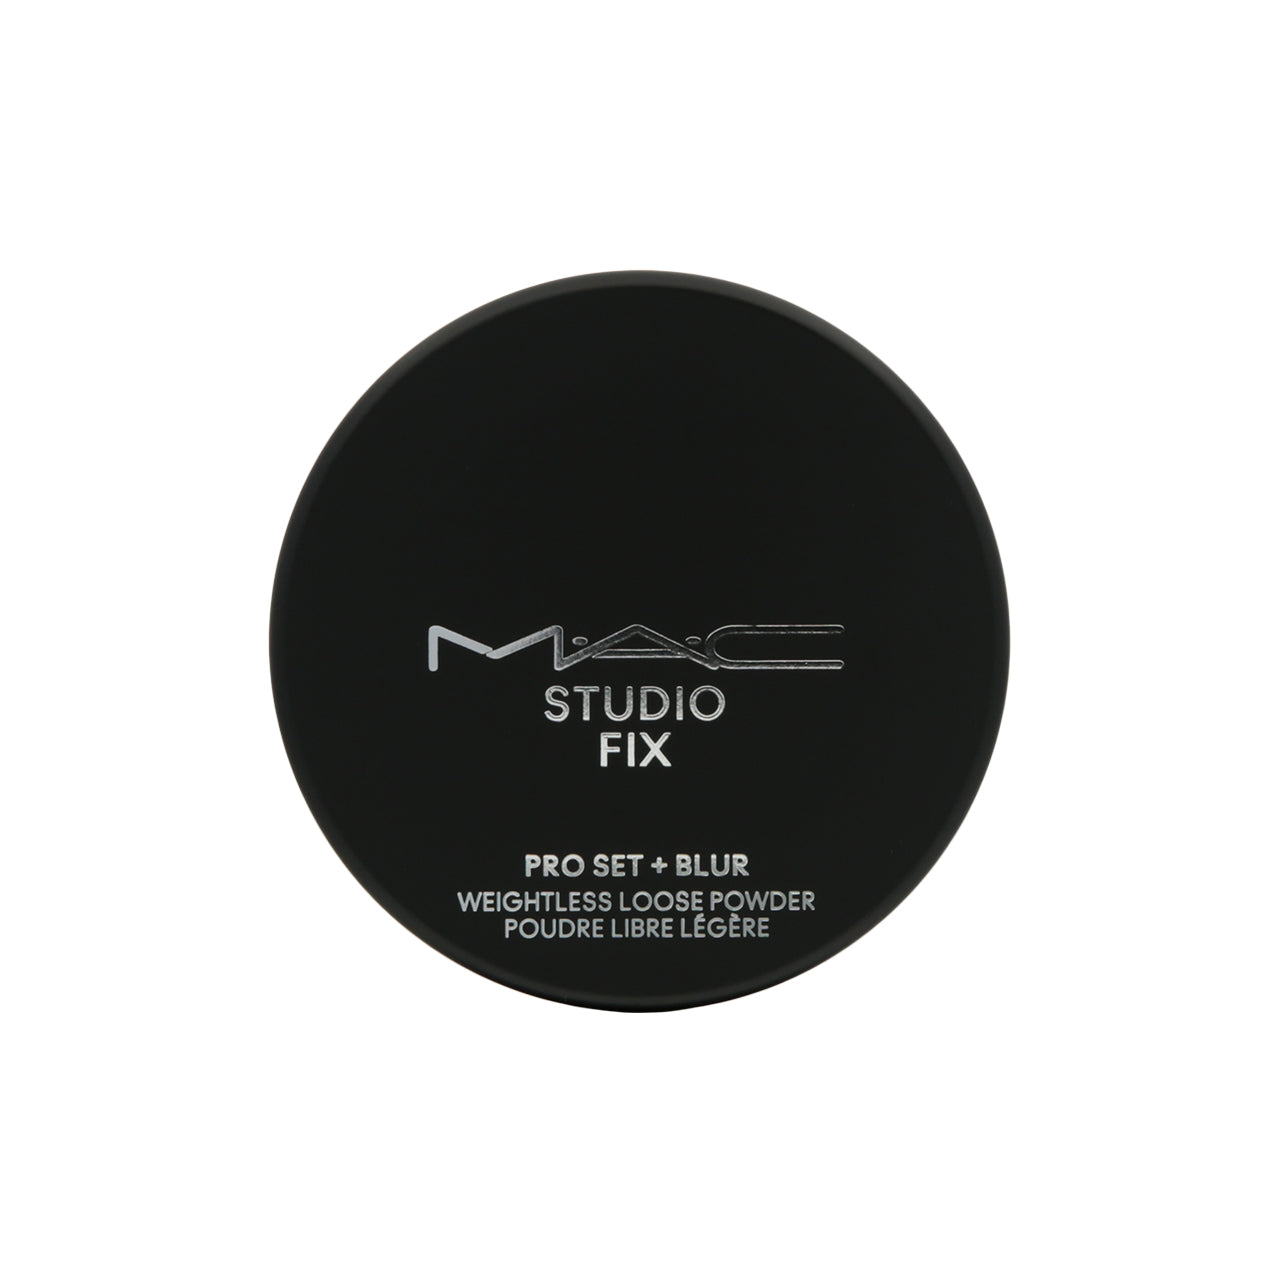 M.A.C Studio Fix Pro Set + Blur Weightless Loose Powder #Lavender 6.5g